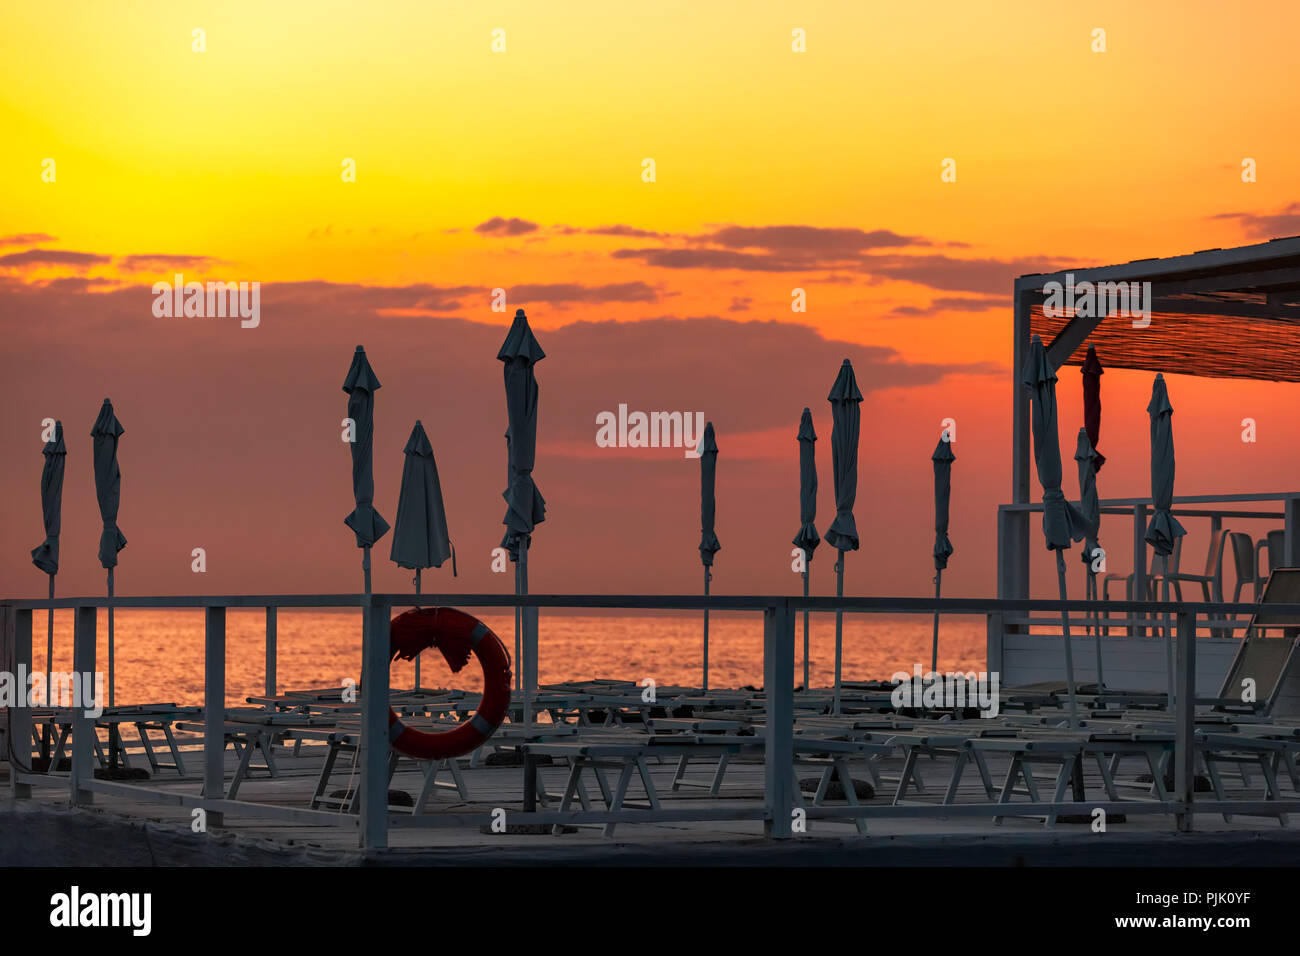 Desert beach resort after sunset, Vendicari, Sicily, Italy Stock Photo